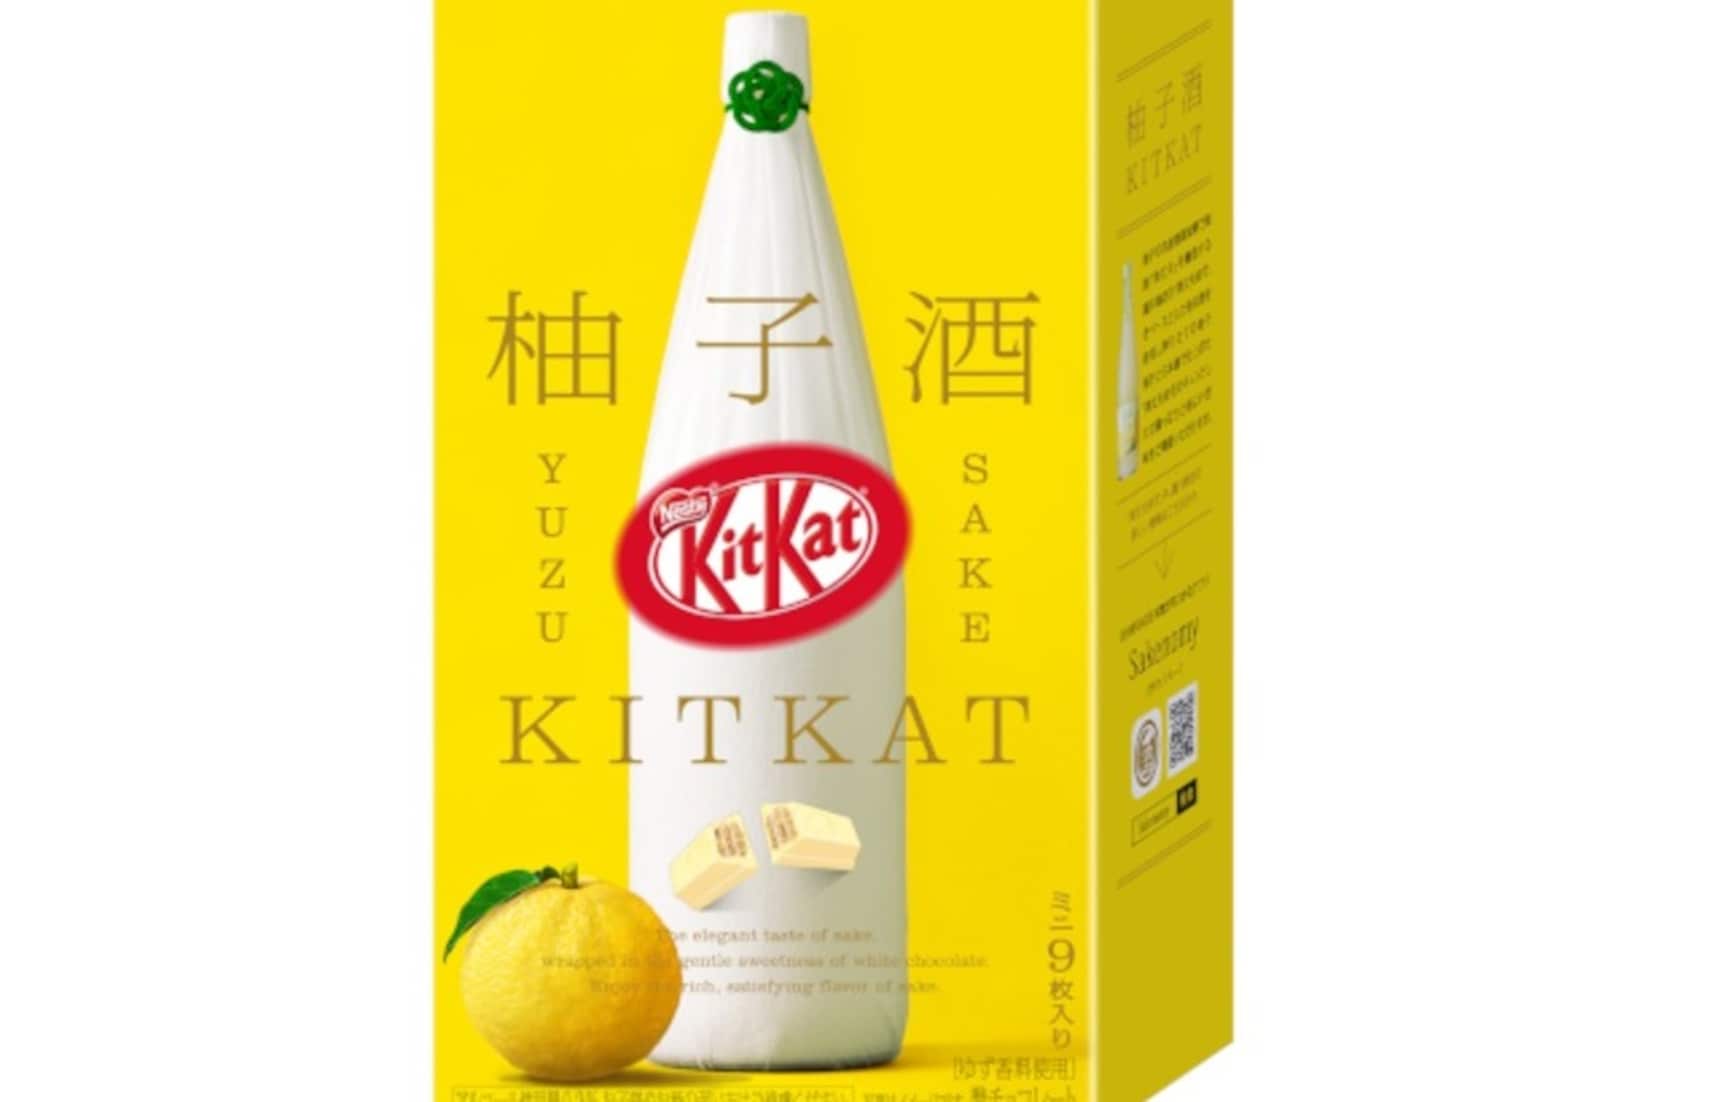 The Newest Alcoholic Kit Kat Features Yuzu